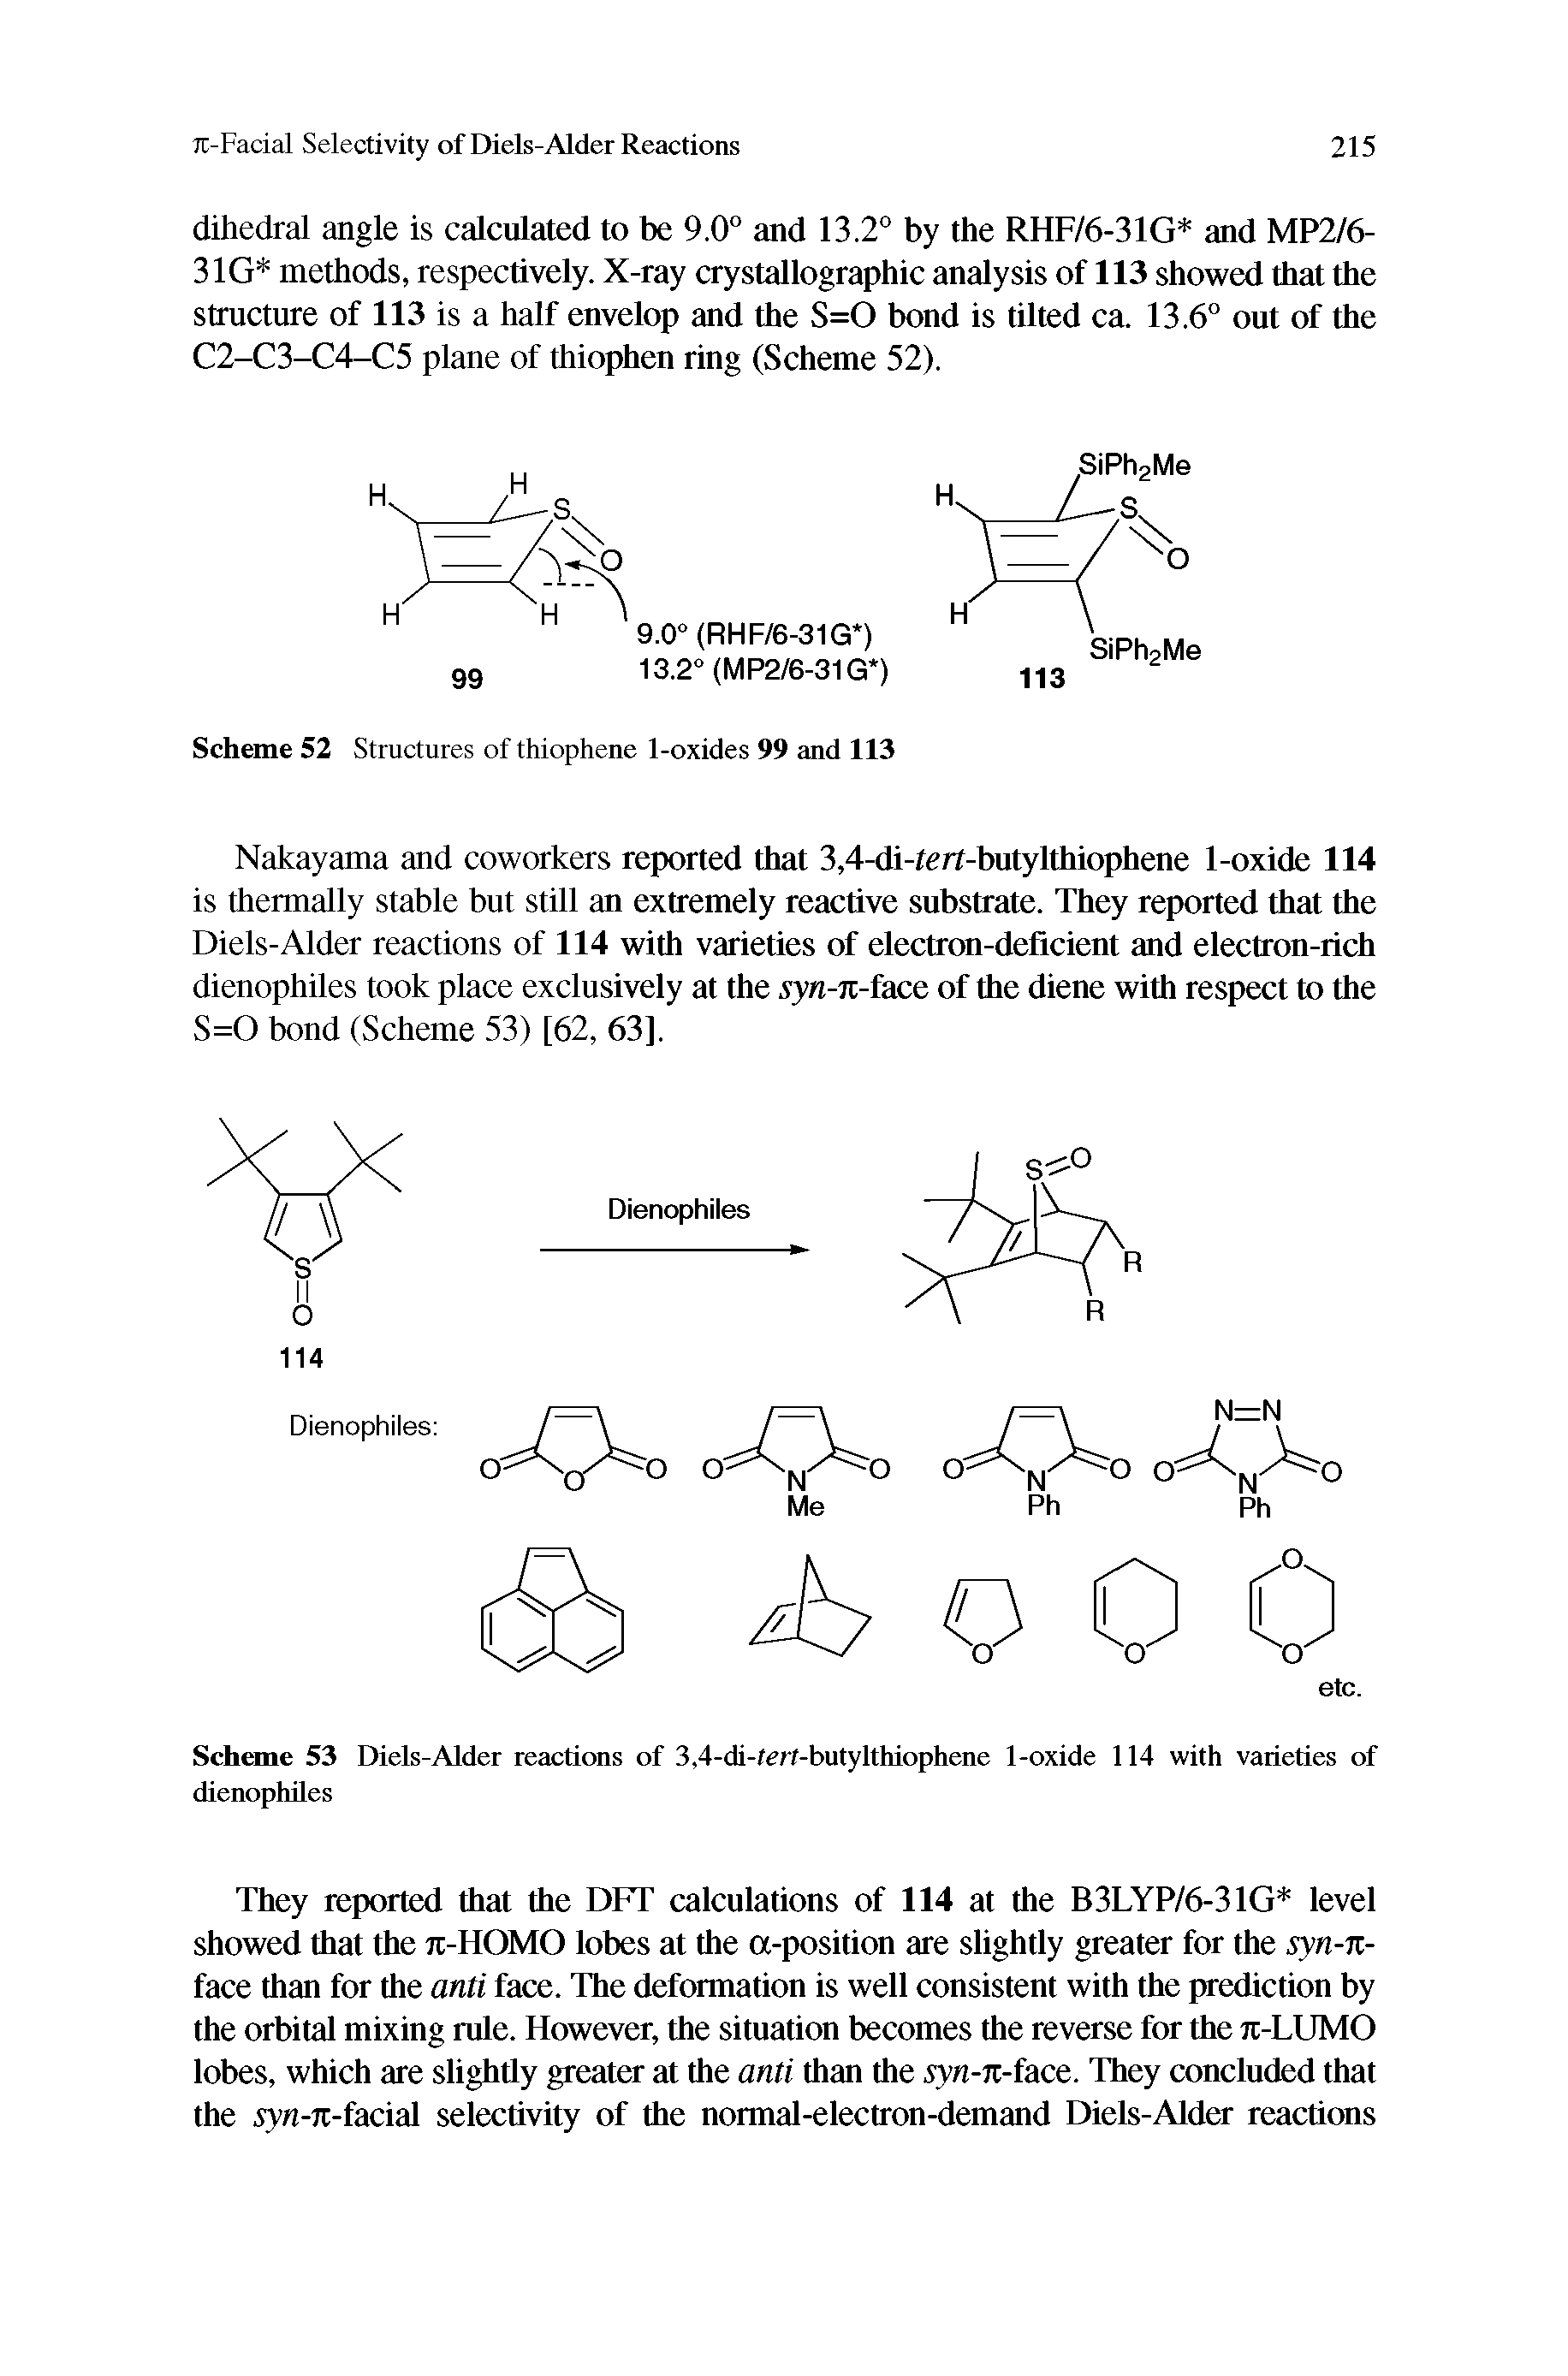 Scheme 53 Diels-Alder reactions of 3,4-di-tert-butylthiophene 1-oxide 114 with varieties of dienophiles...